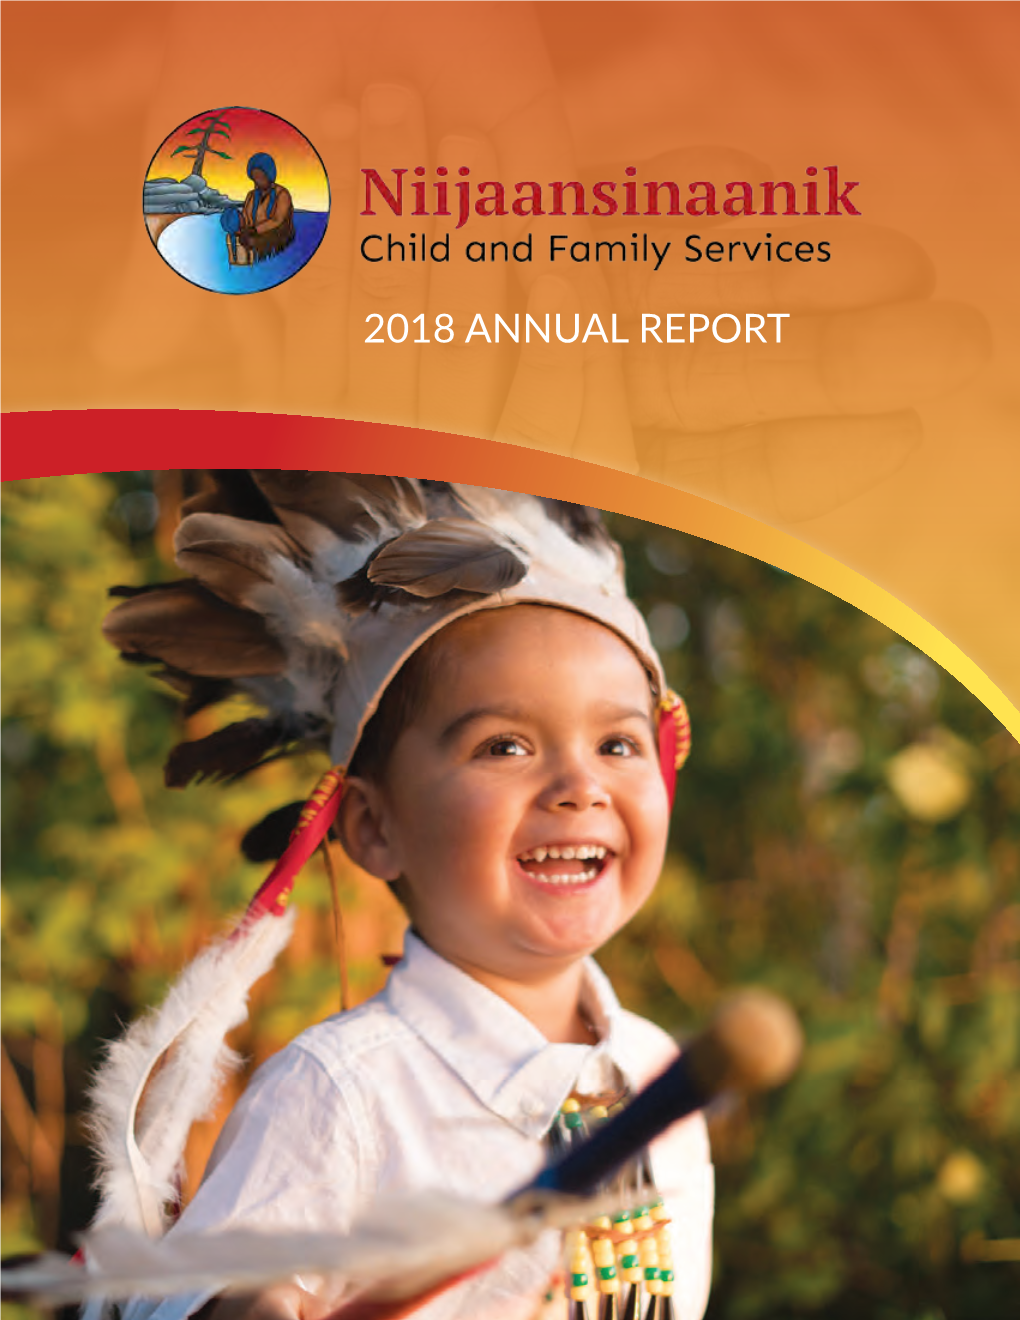 2018 ANNUAL REPORT Niijaansinaanik Means “Our Children” in Anishinaabemowin